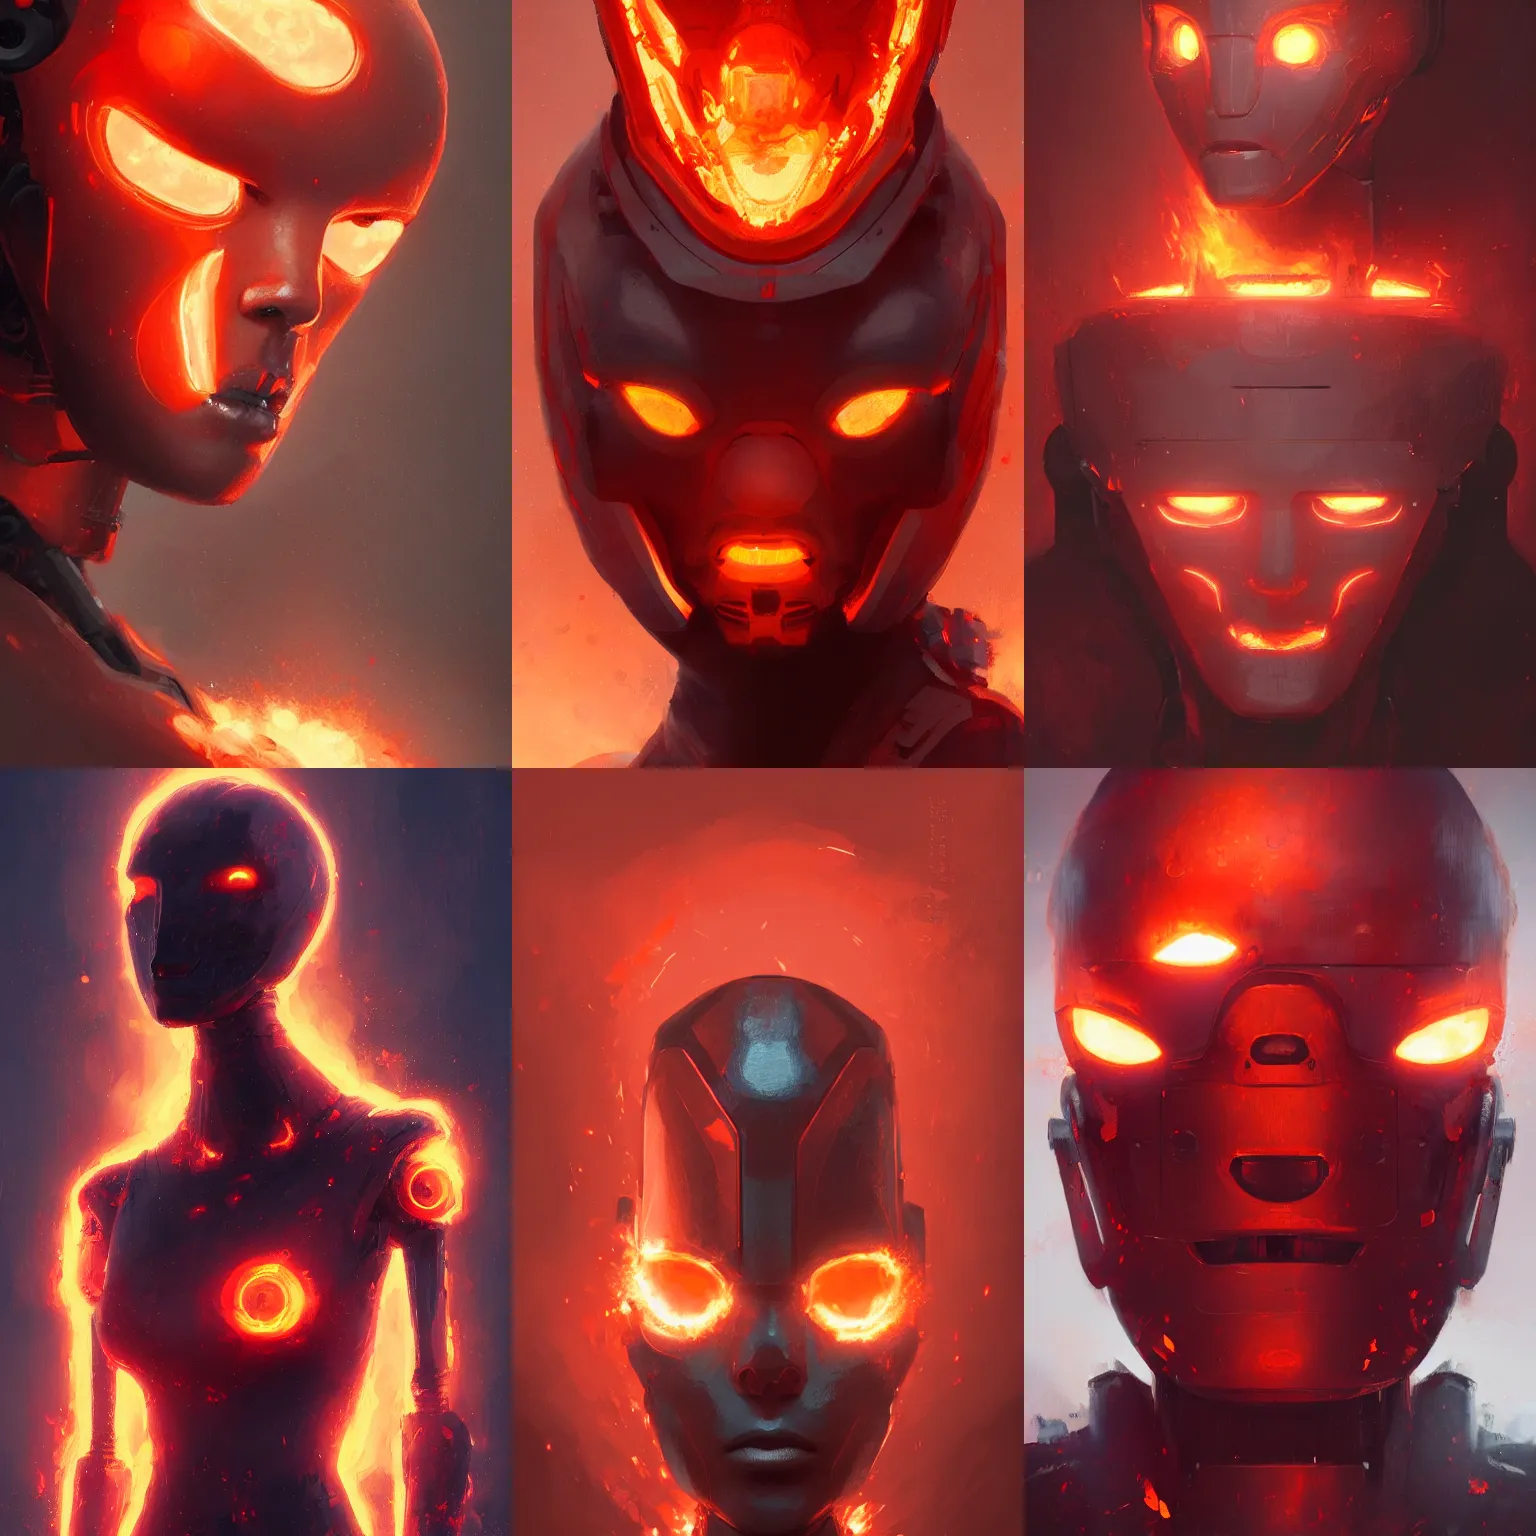 Prompt: portrait of a robot on fire, red eyes, embers, by greg rutkowski, artstation